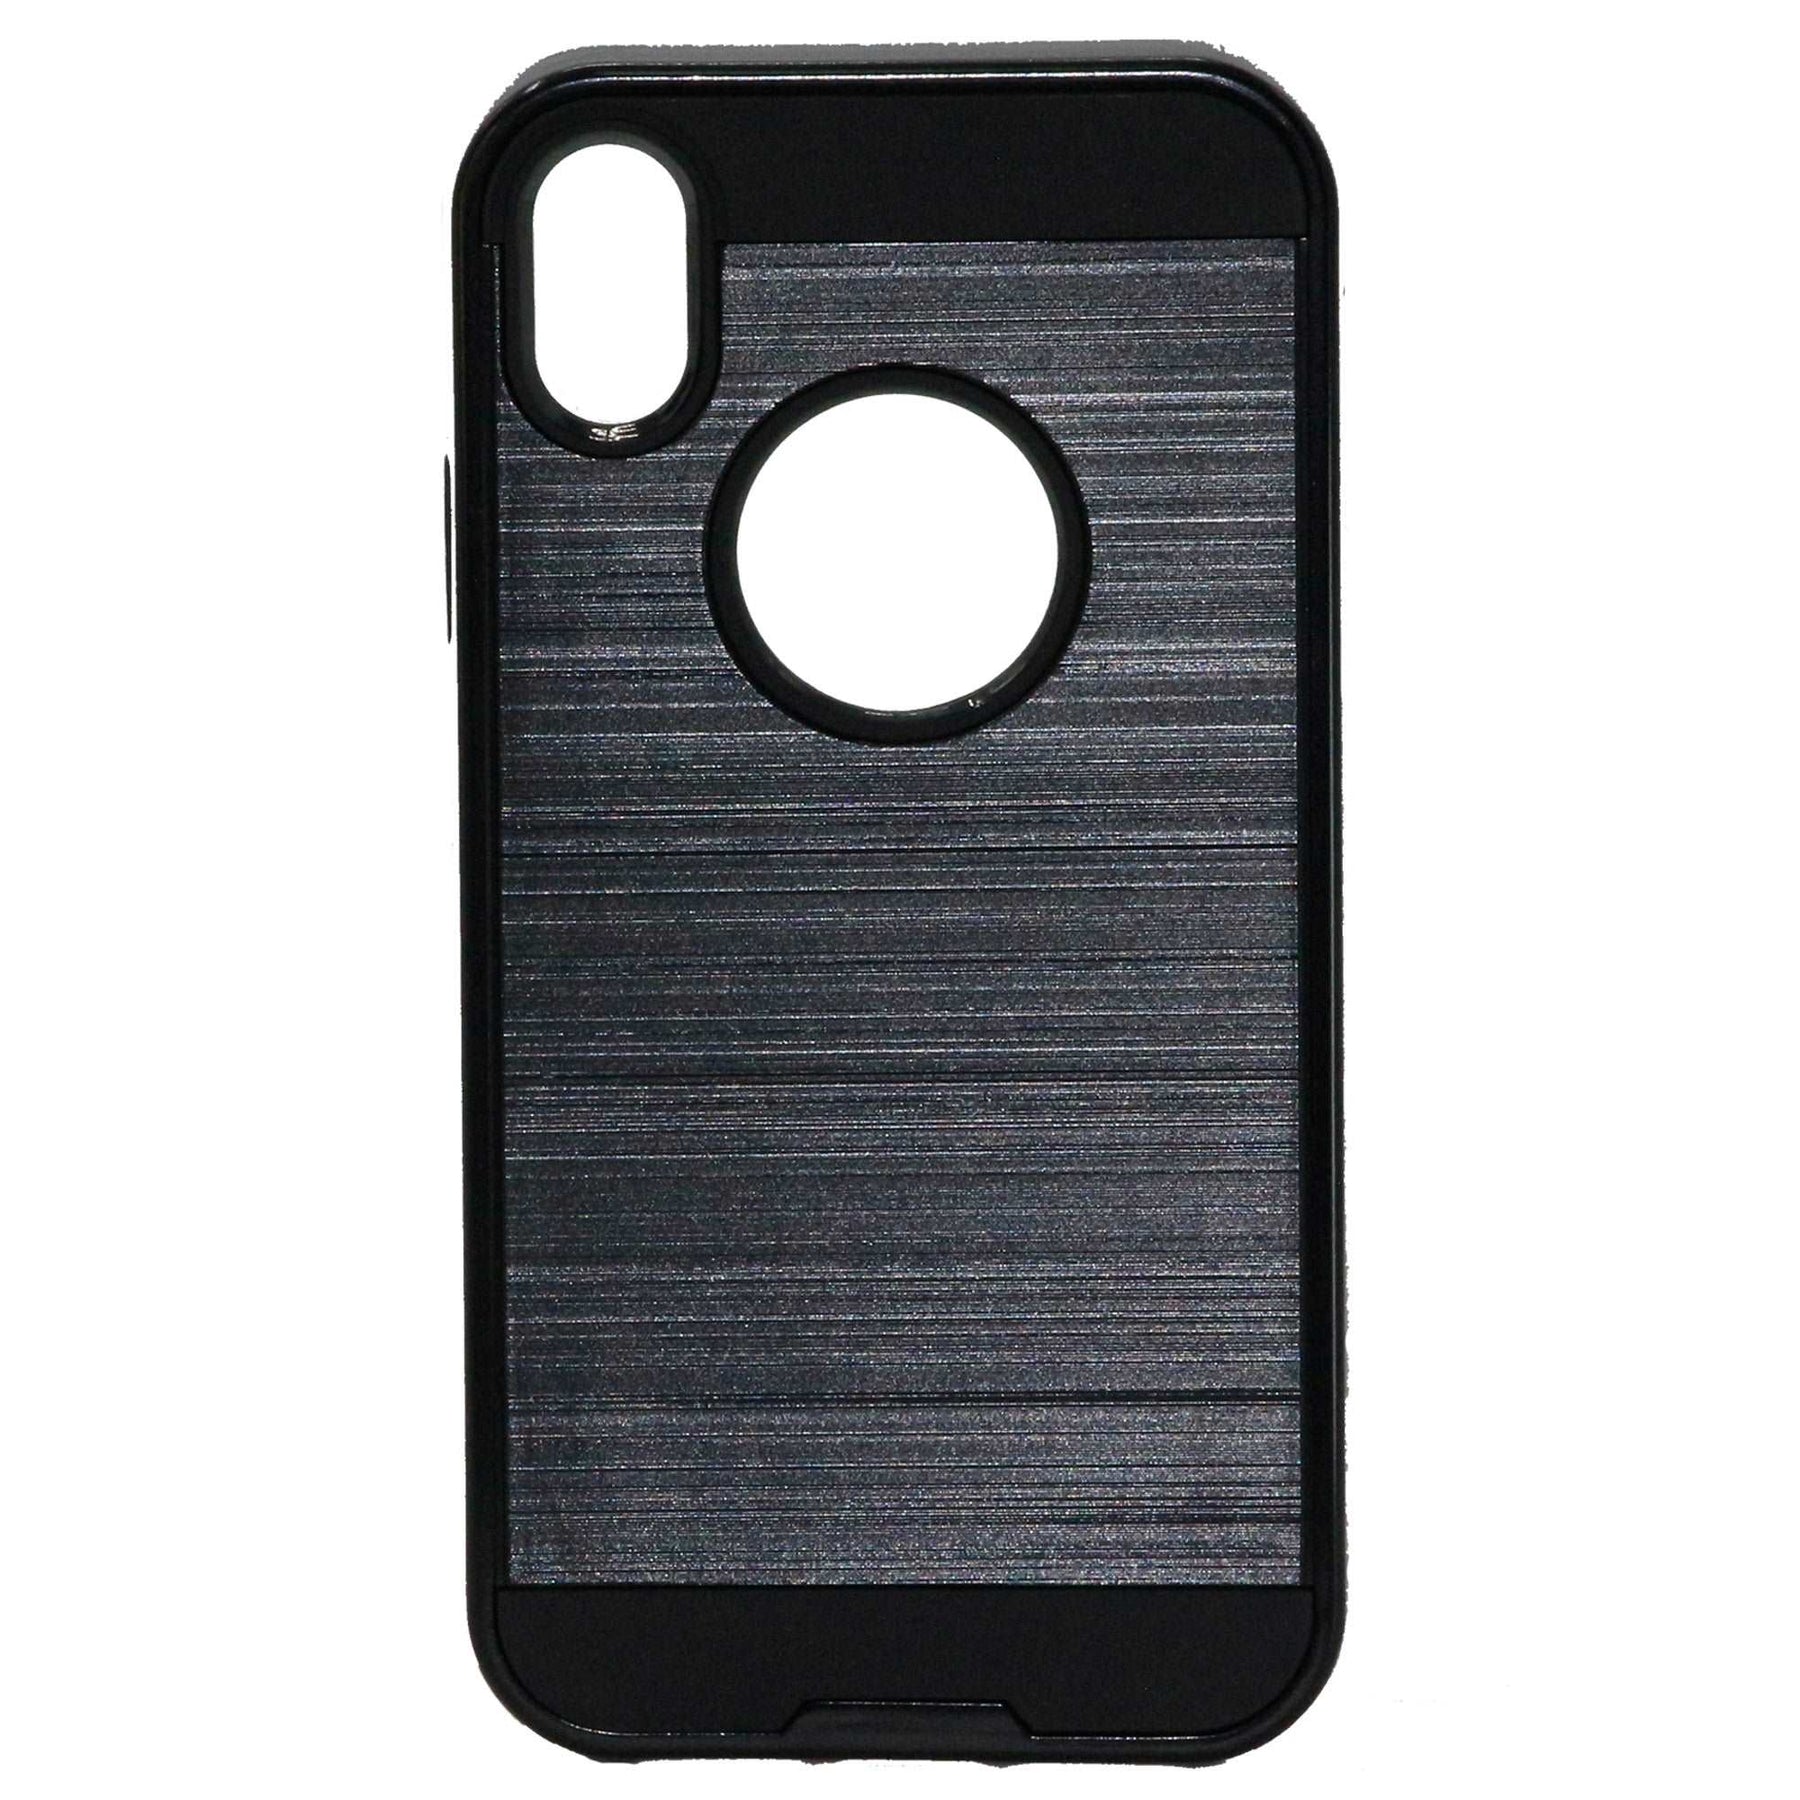 iPhone xr black slim case